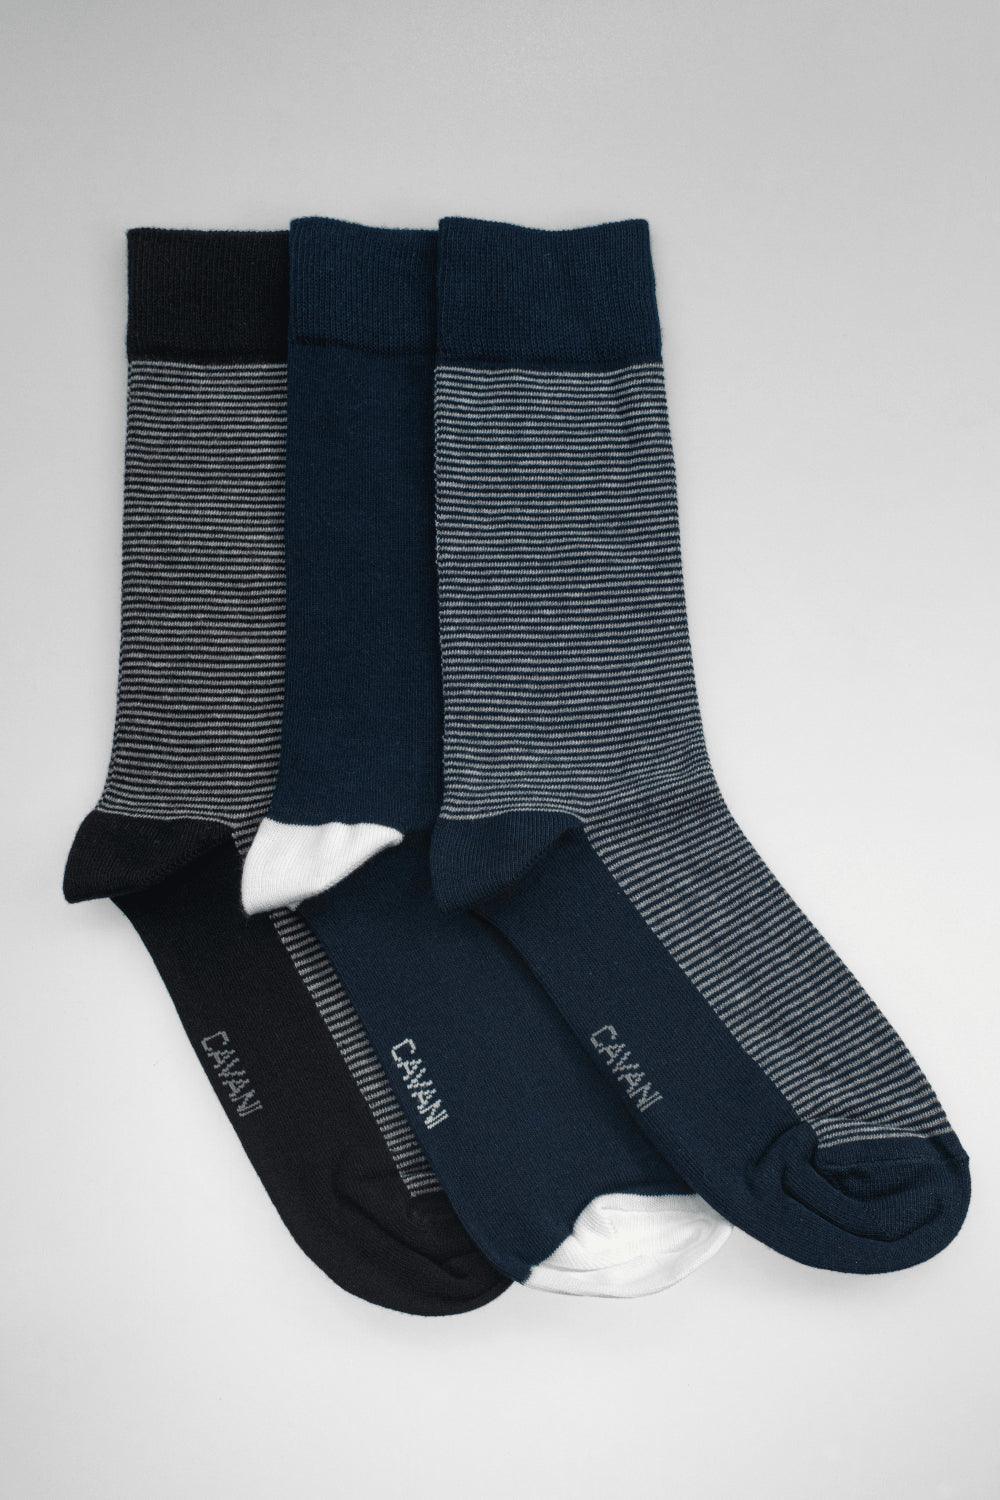 Stark socks set